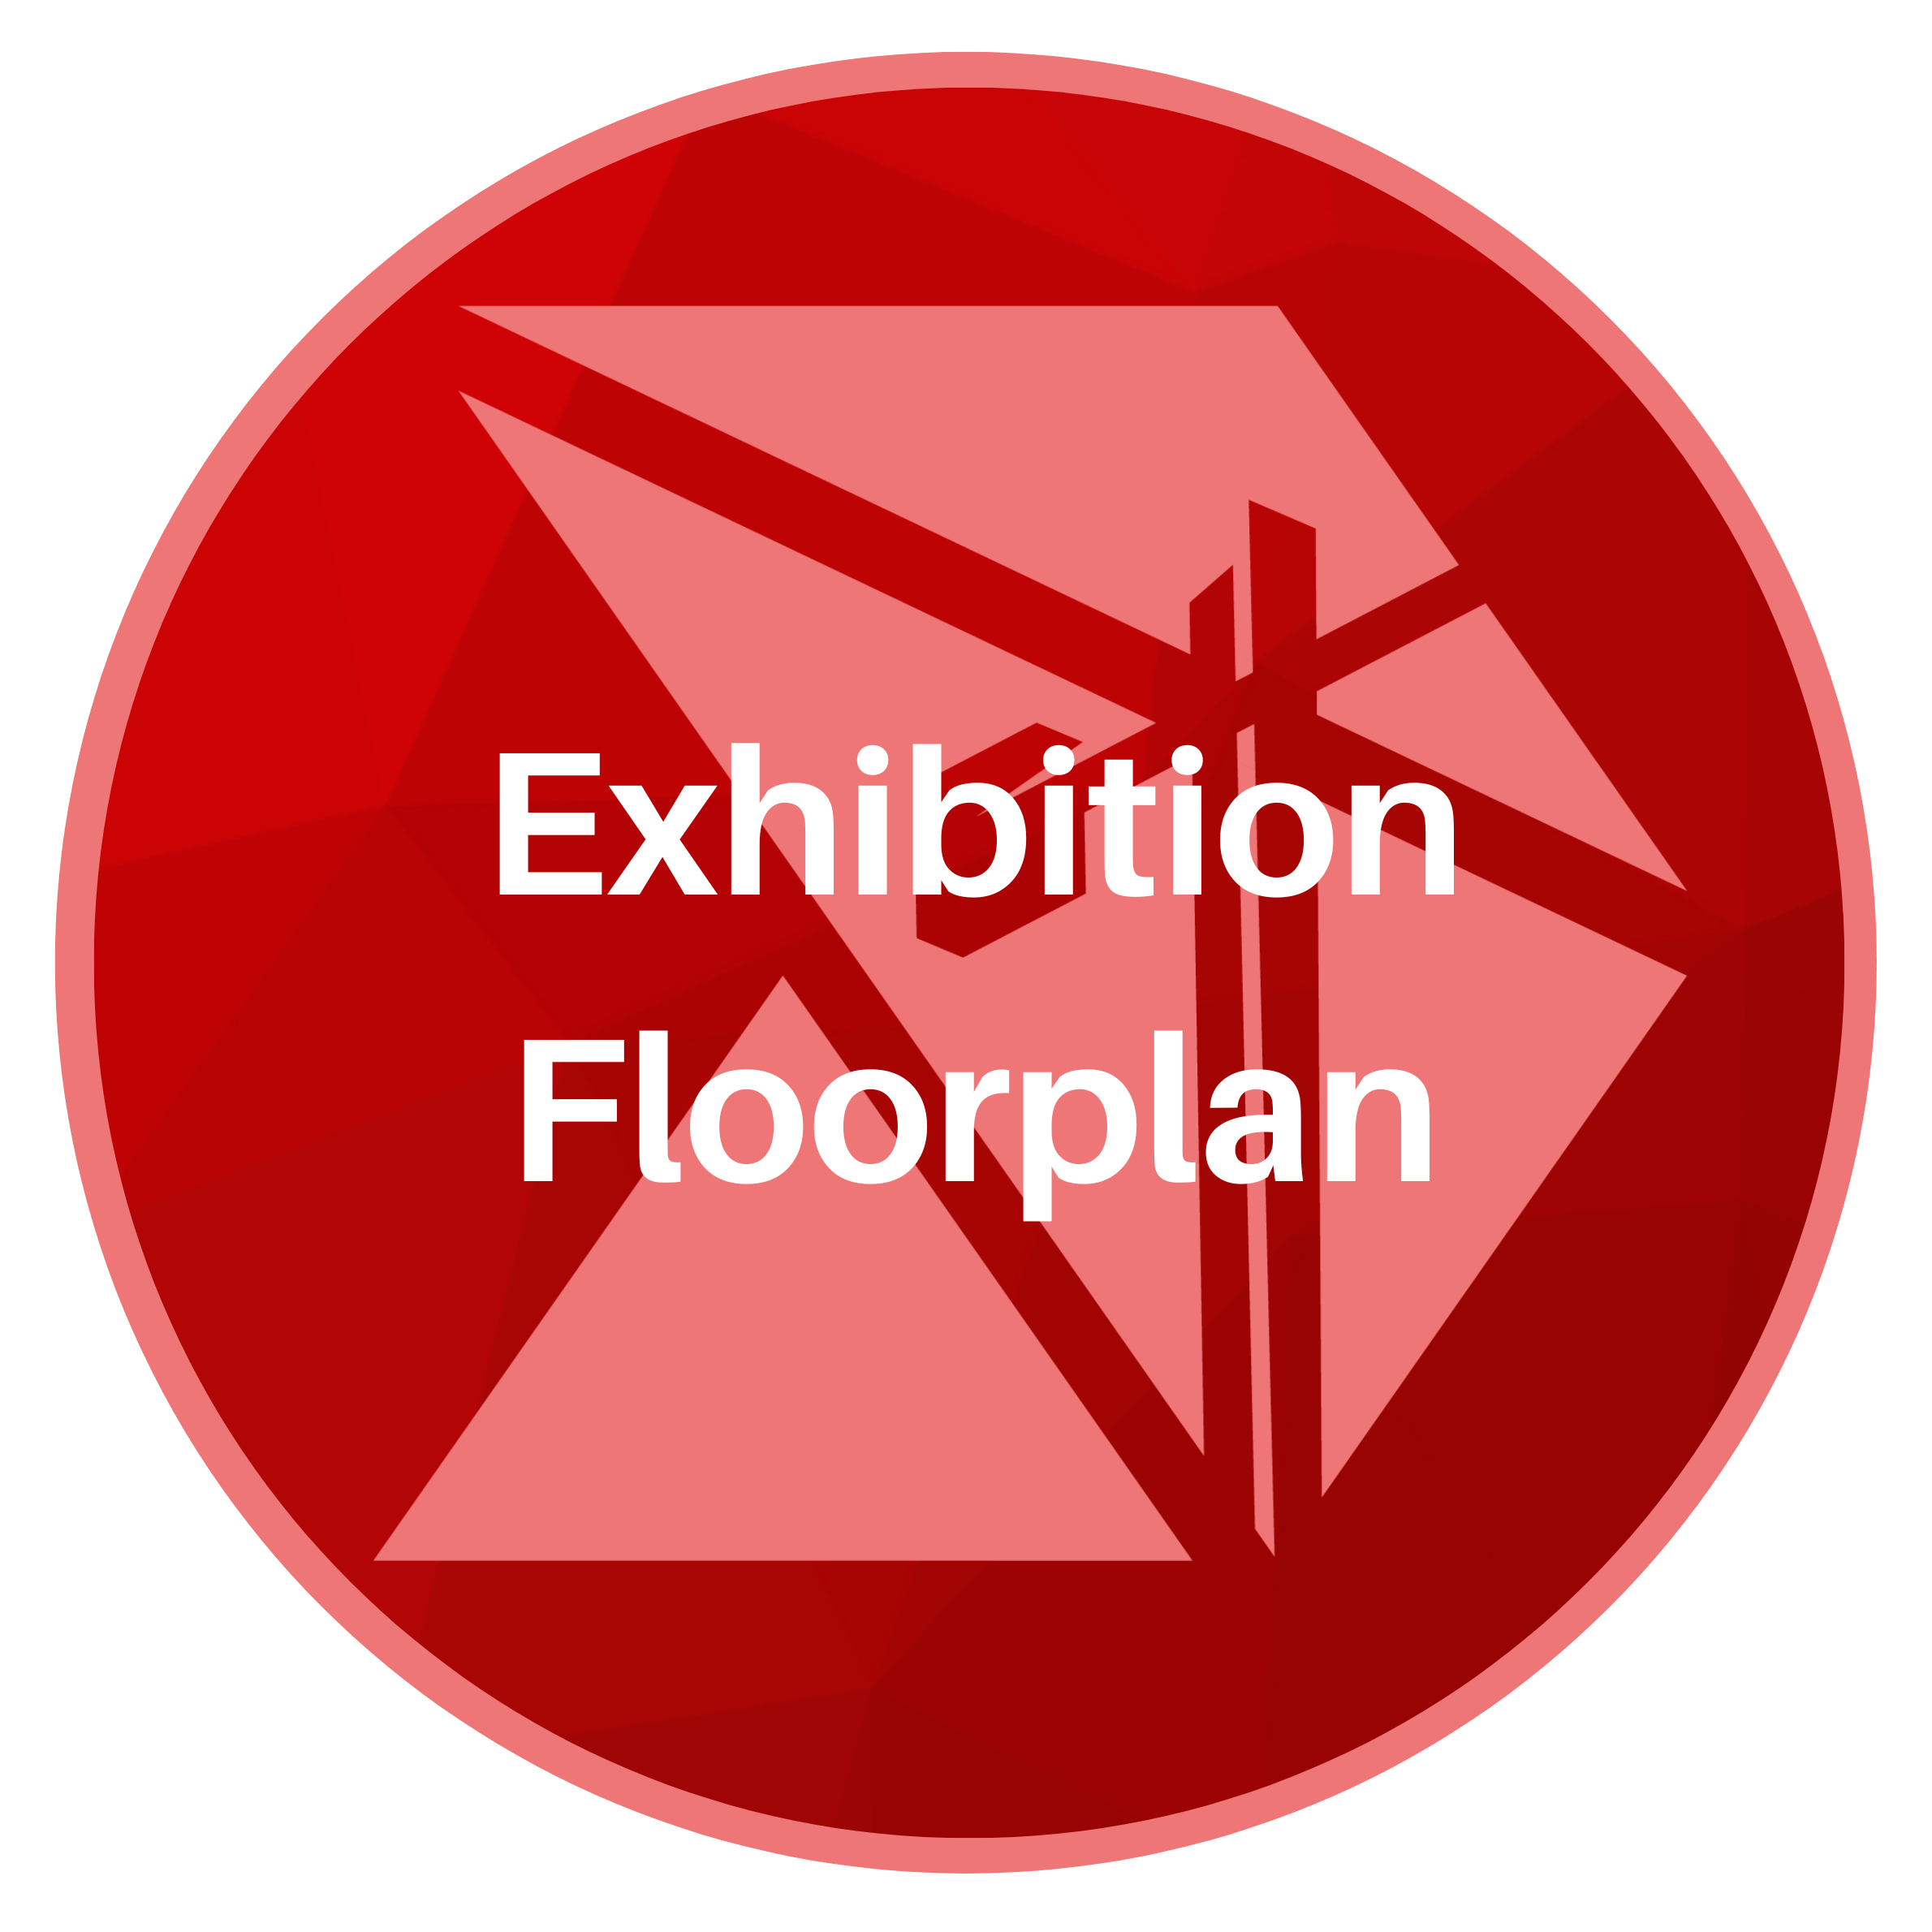 Exhib Floorplan - coming soon